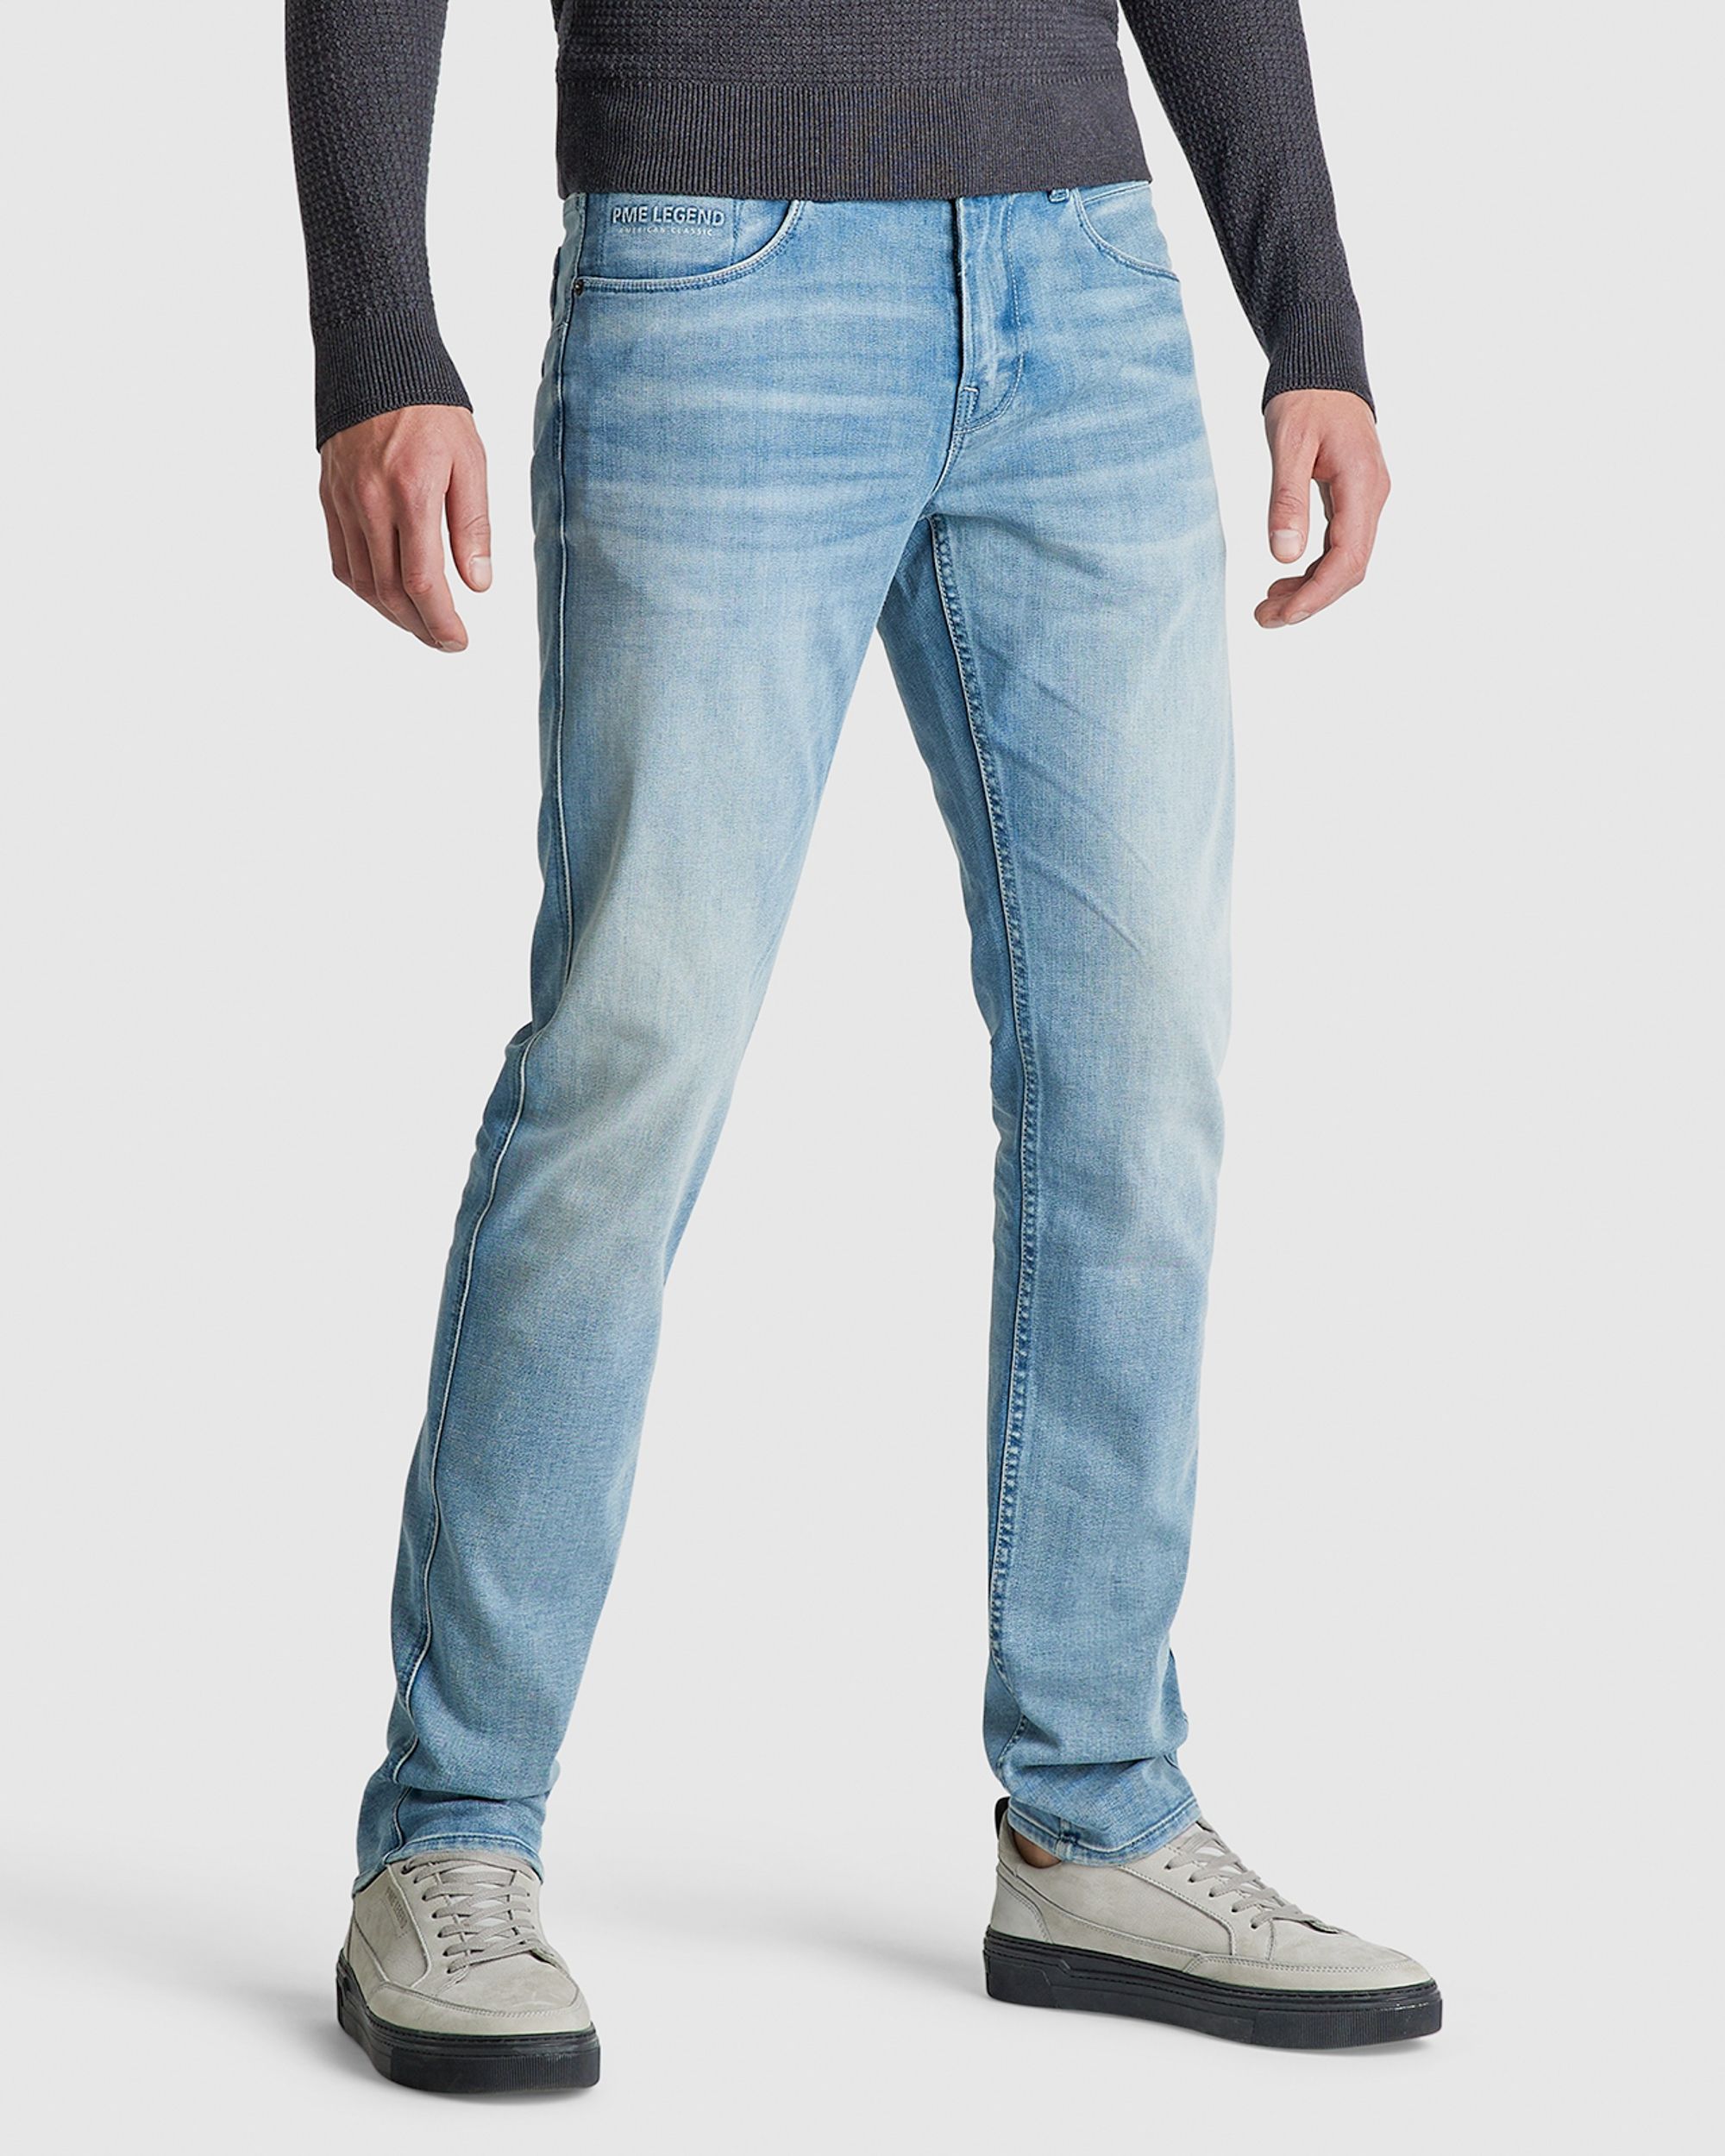 PME Legend Nightflight Jeans Blauw 072461-001-28/30